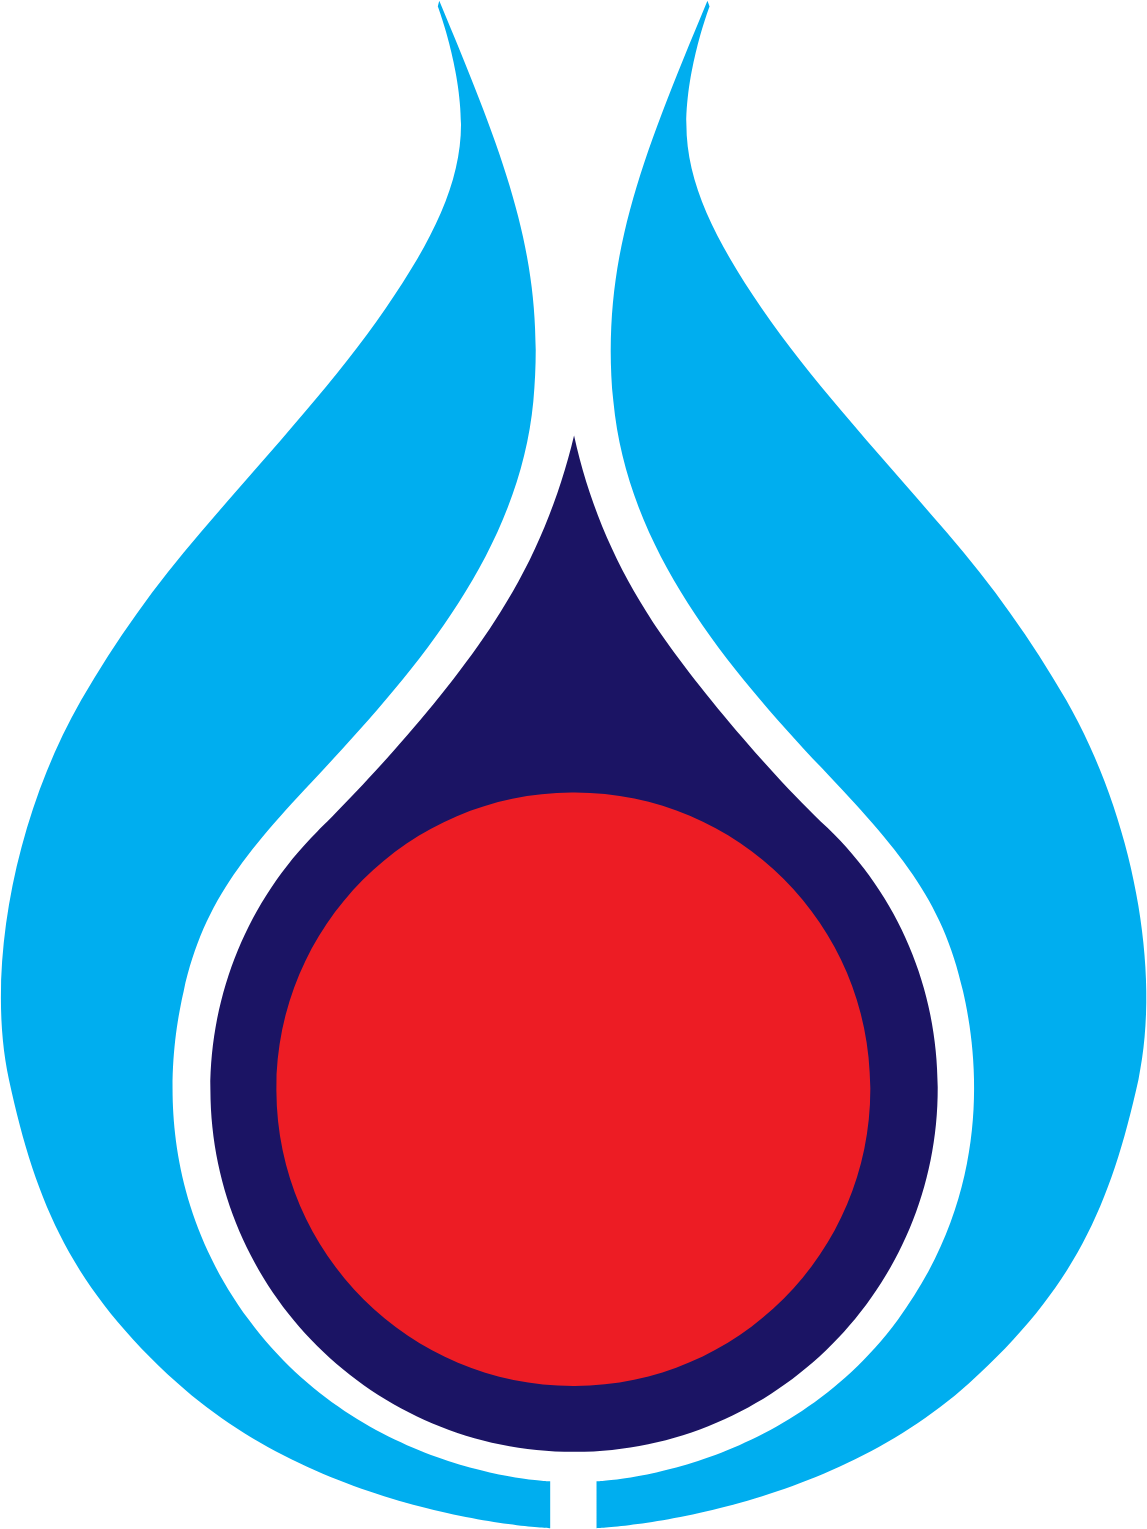 PTT Global Chemical logo (transparent PNG)